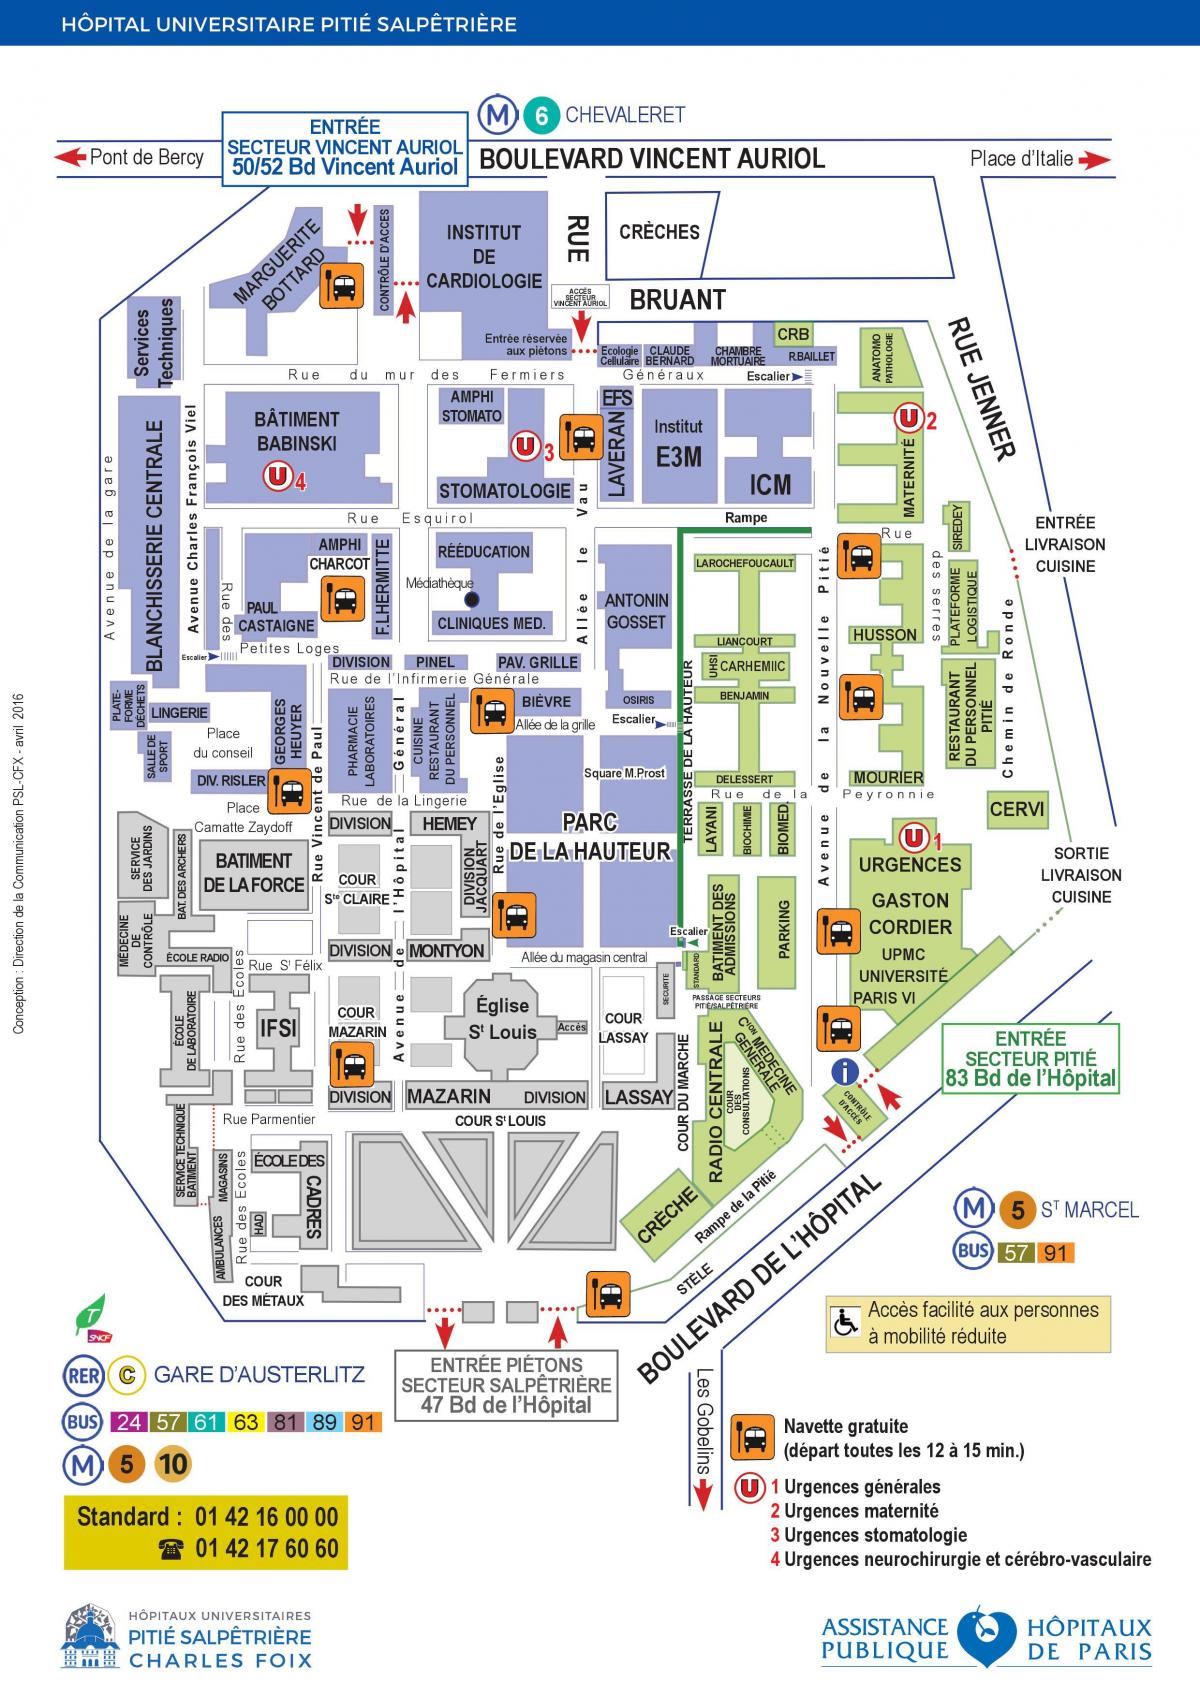 Karta över Pitie Salpêtrière-sjukhuset